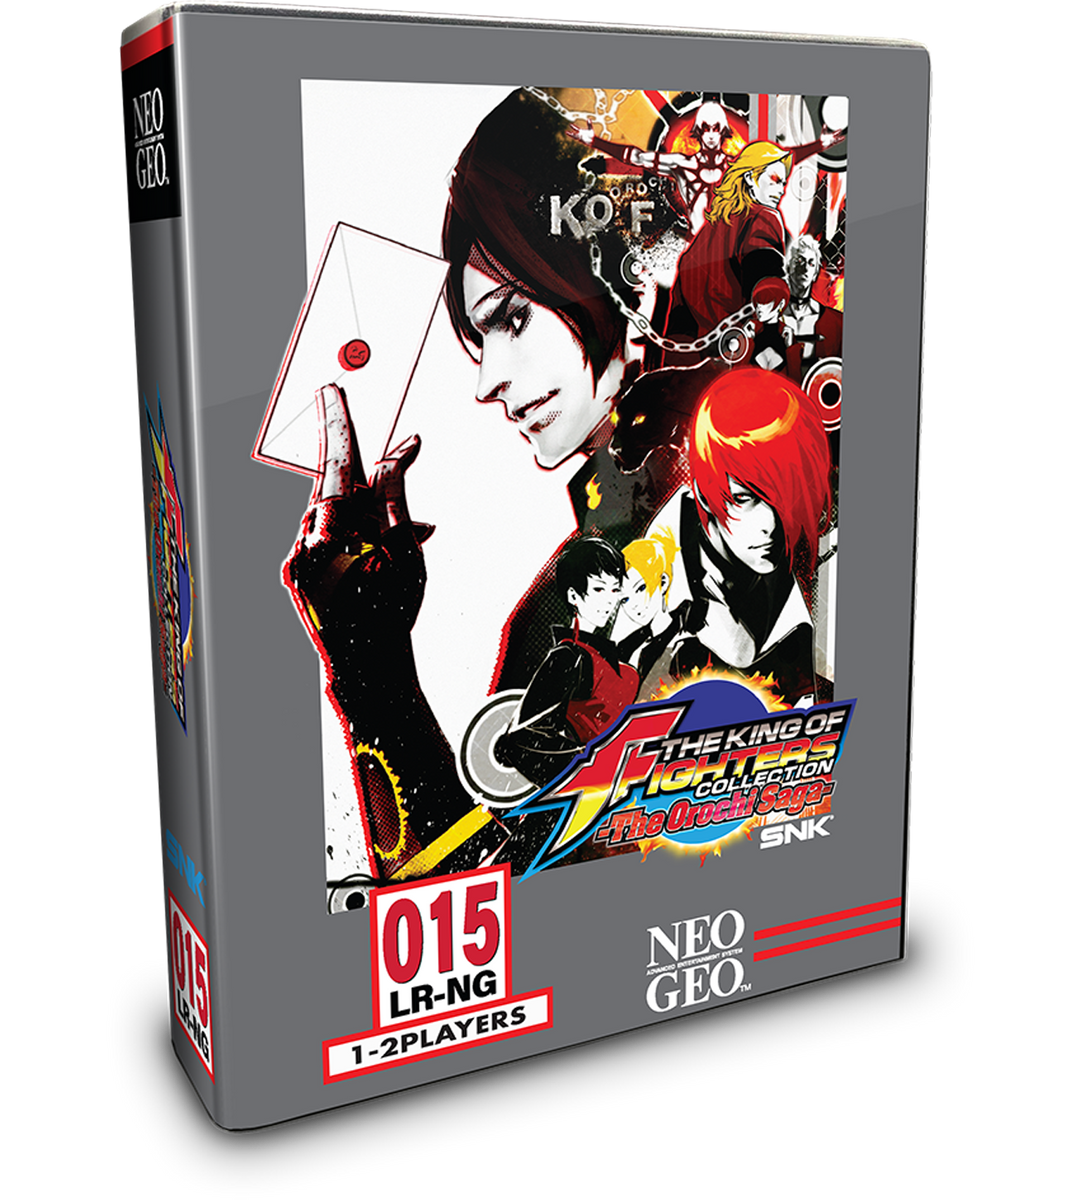 PS4 ザ・キング・オブ・ファイターズ コレクション オロチ / KOF Col